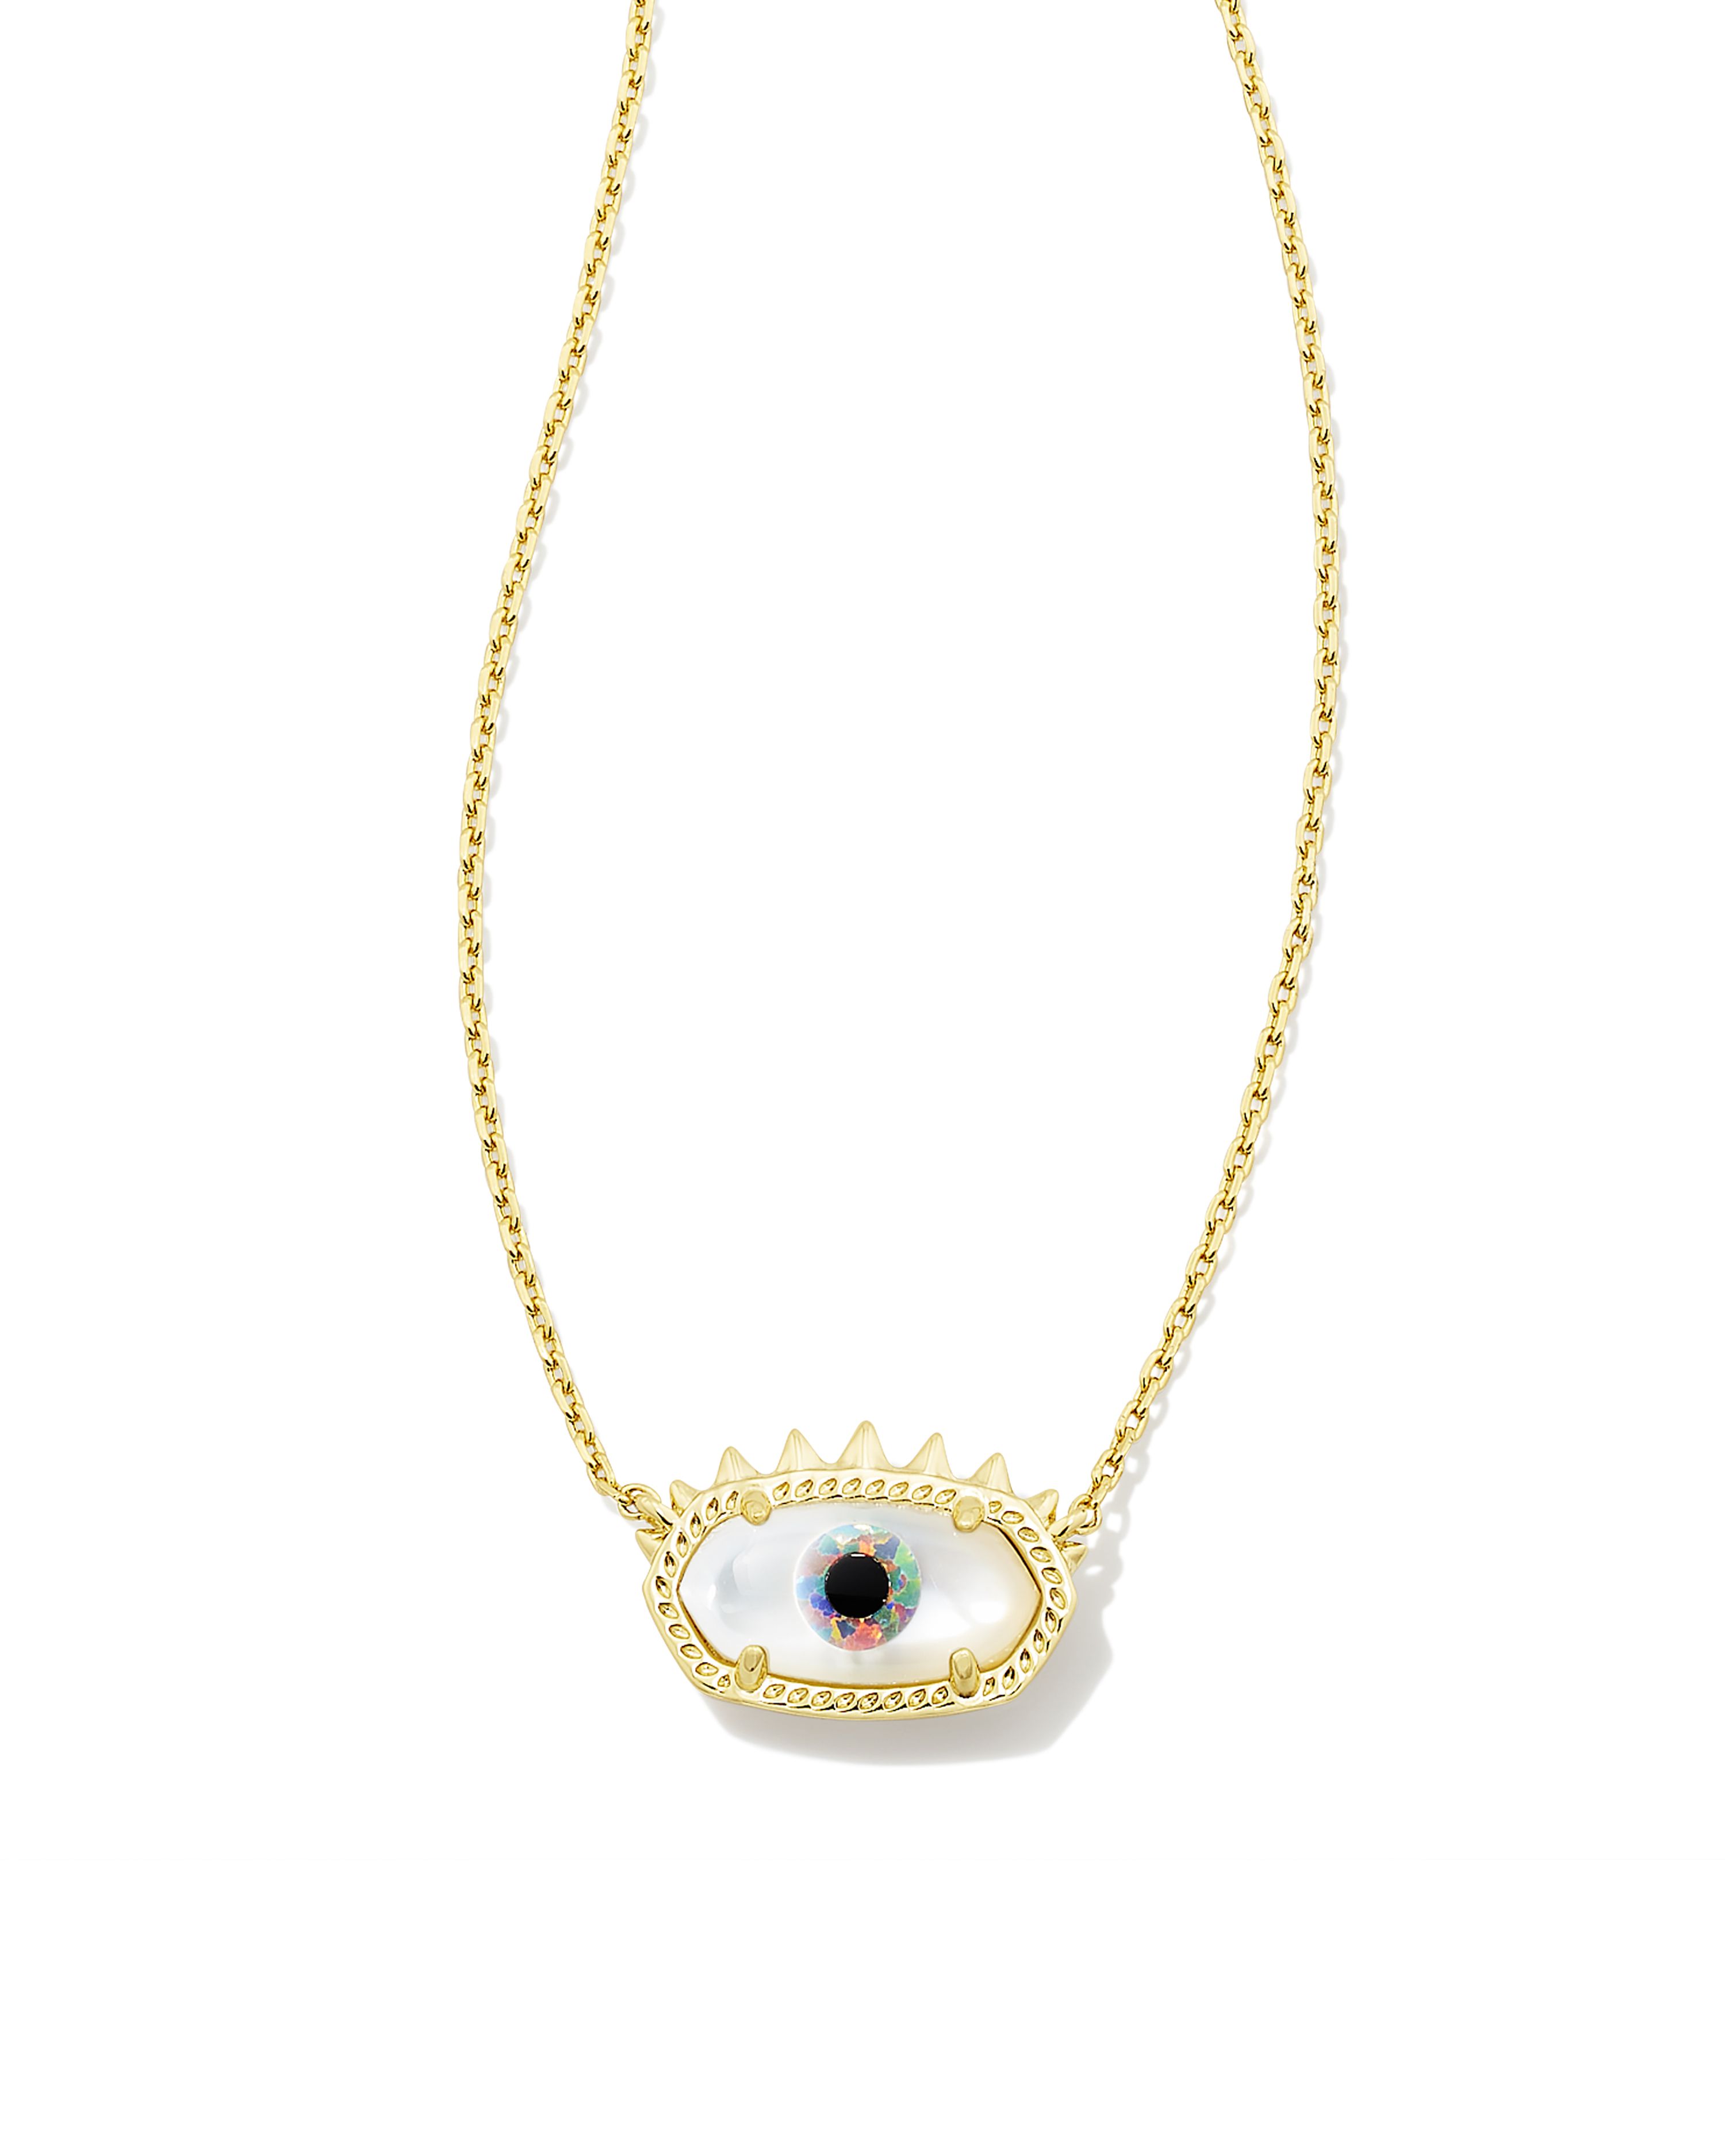 Elisa Evil Eye Gold Short Pendant Necklace in Ivory Mother-of-Pearl | Kendra Scott